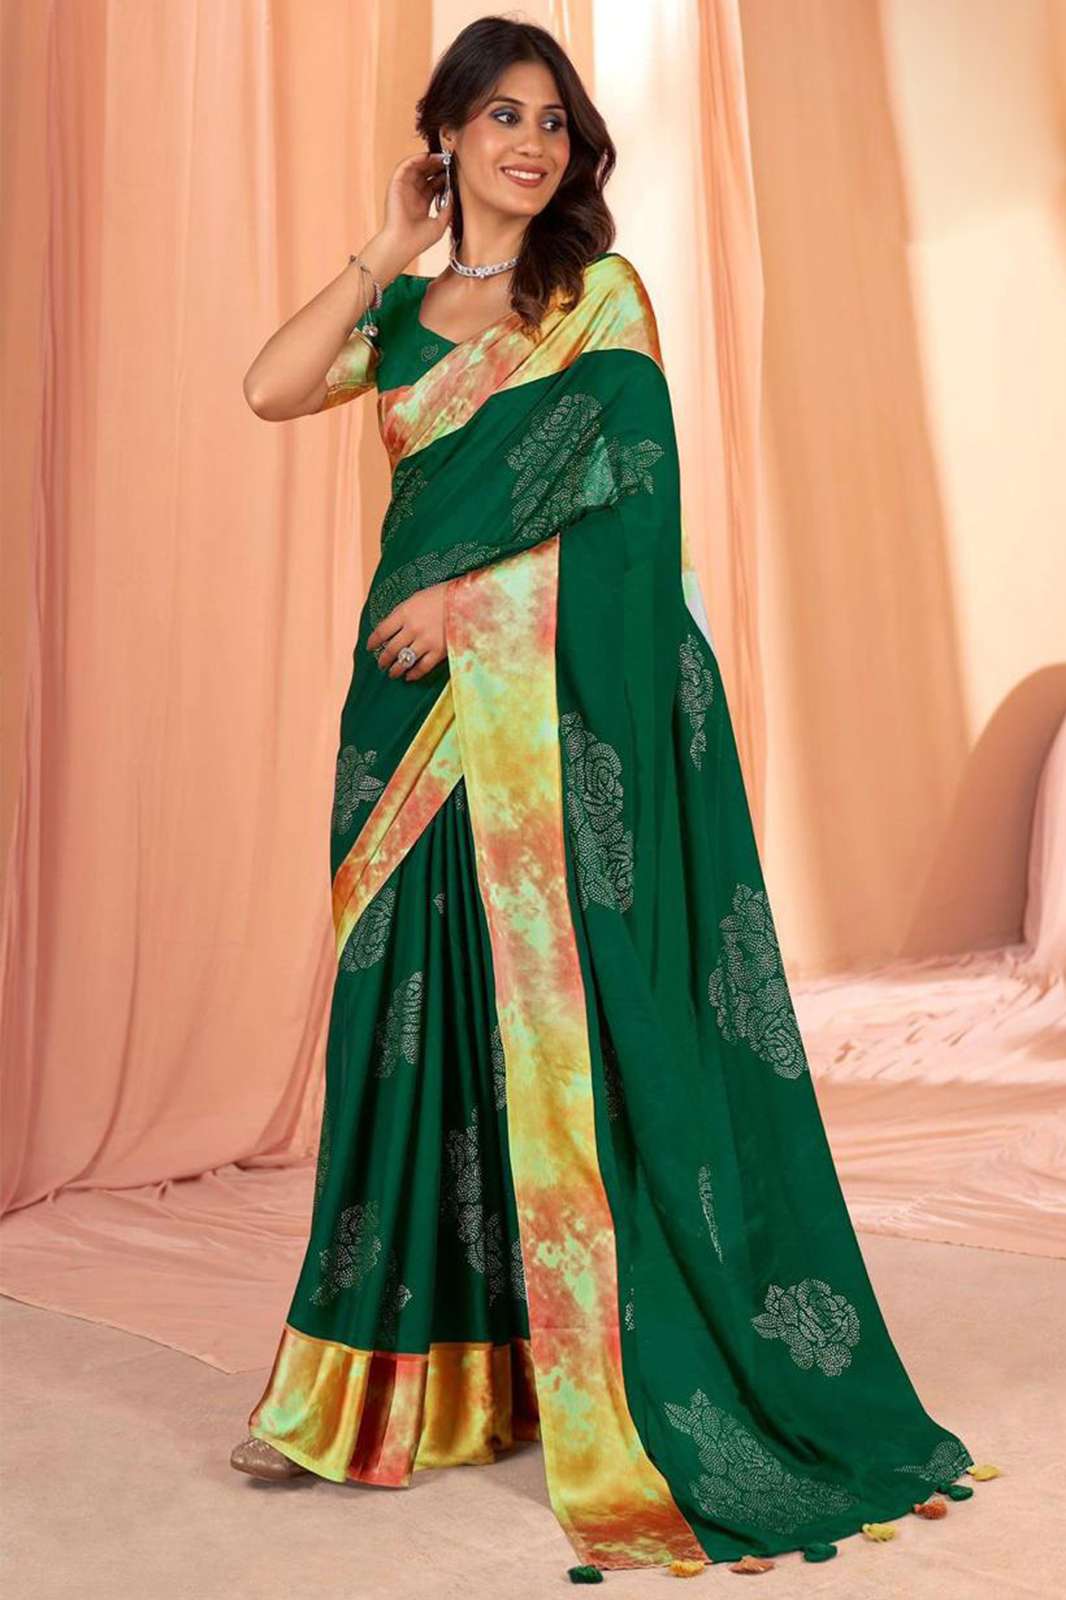 LT Fabrics ZAMAKA Soft Silk With Satin Border in multicolors with beautiful border saree.